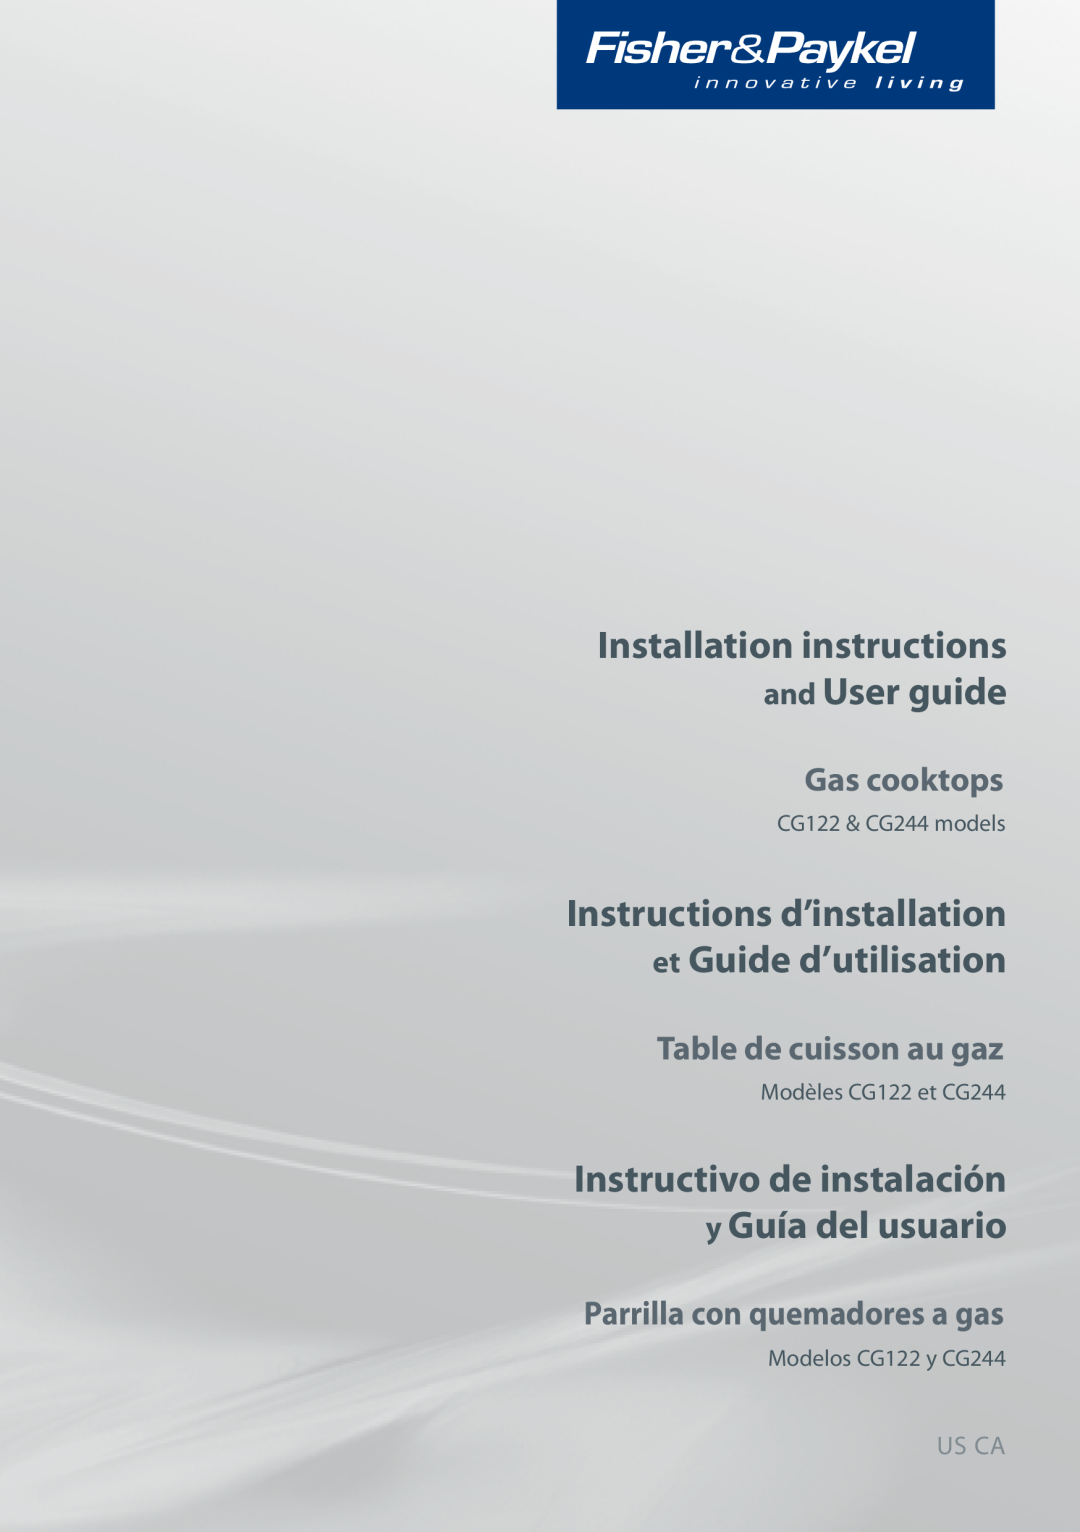 Fisher & Paykel CG122 installation instructions Gas cooktops, Table de cuisson au gaz, Parrilla con quemadores a gas 